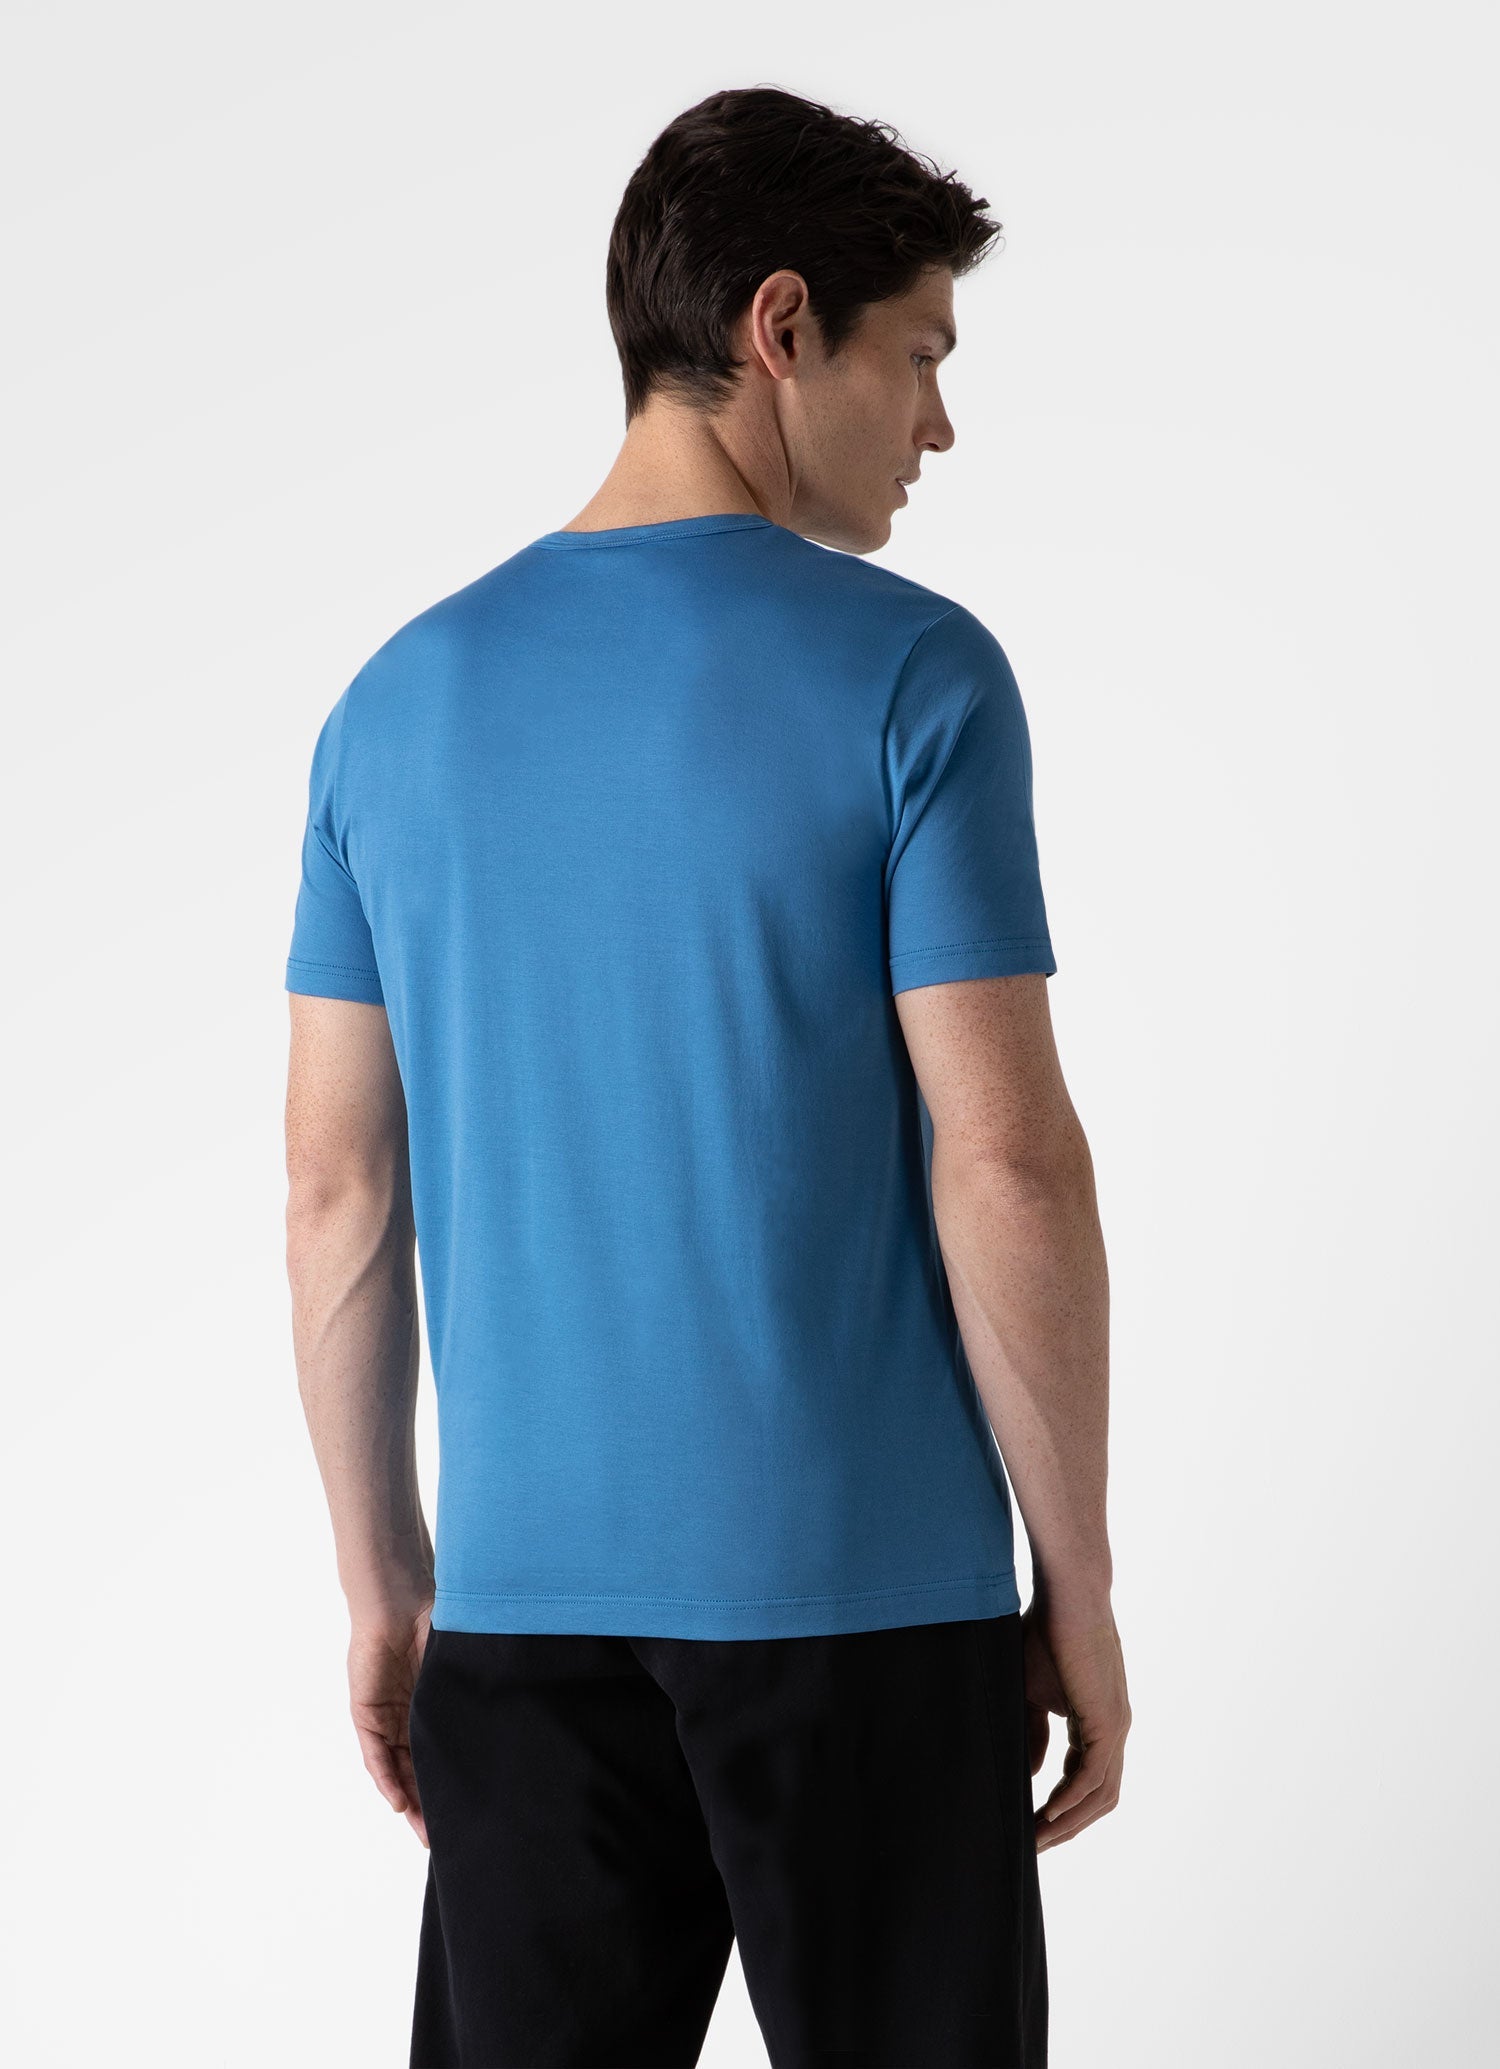 Men's Classic T-shirt in Blue Jean